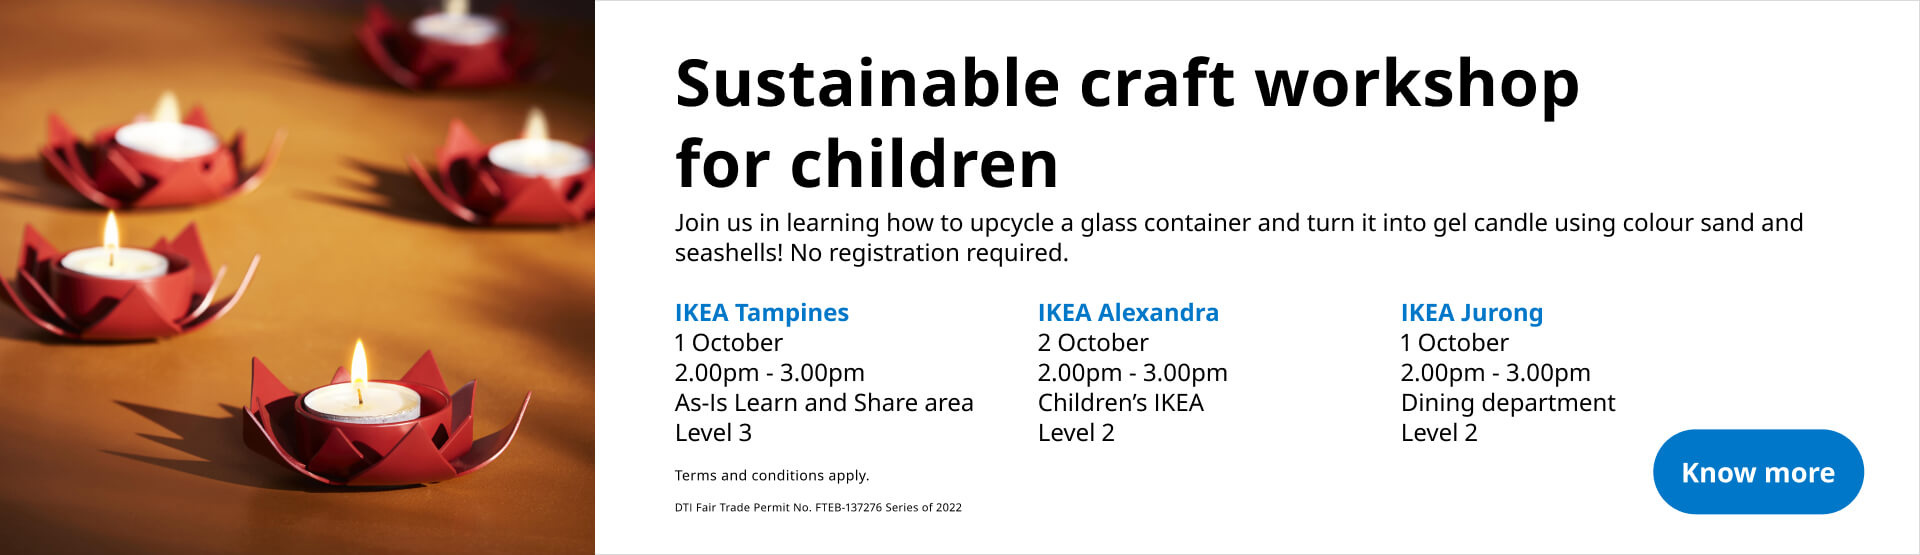 IKEA Family - Kids Sustainable Craft Workshop